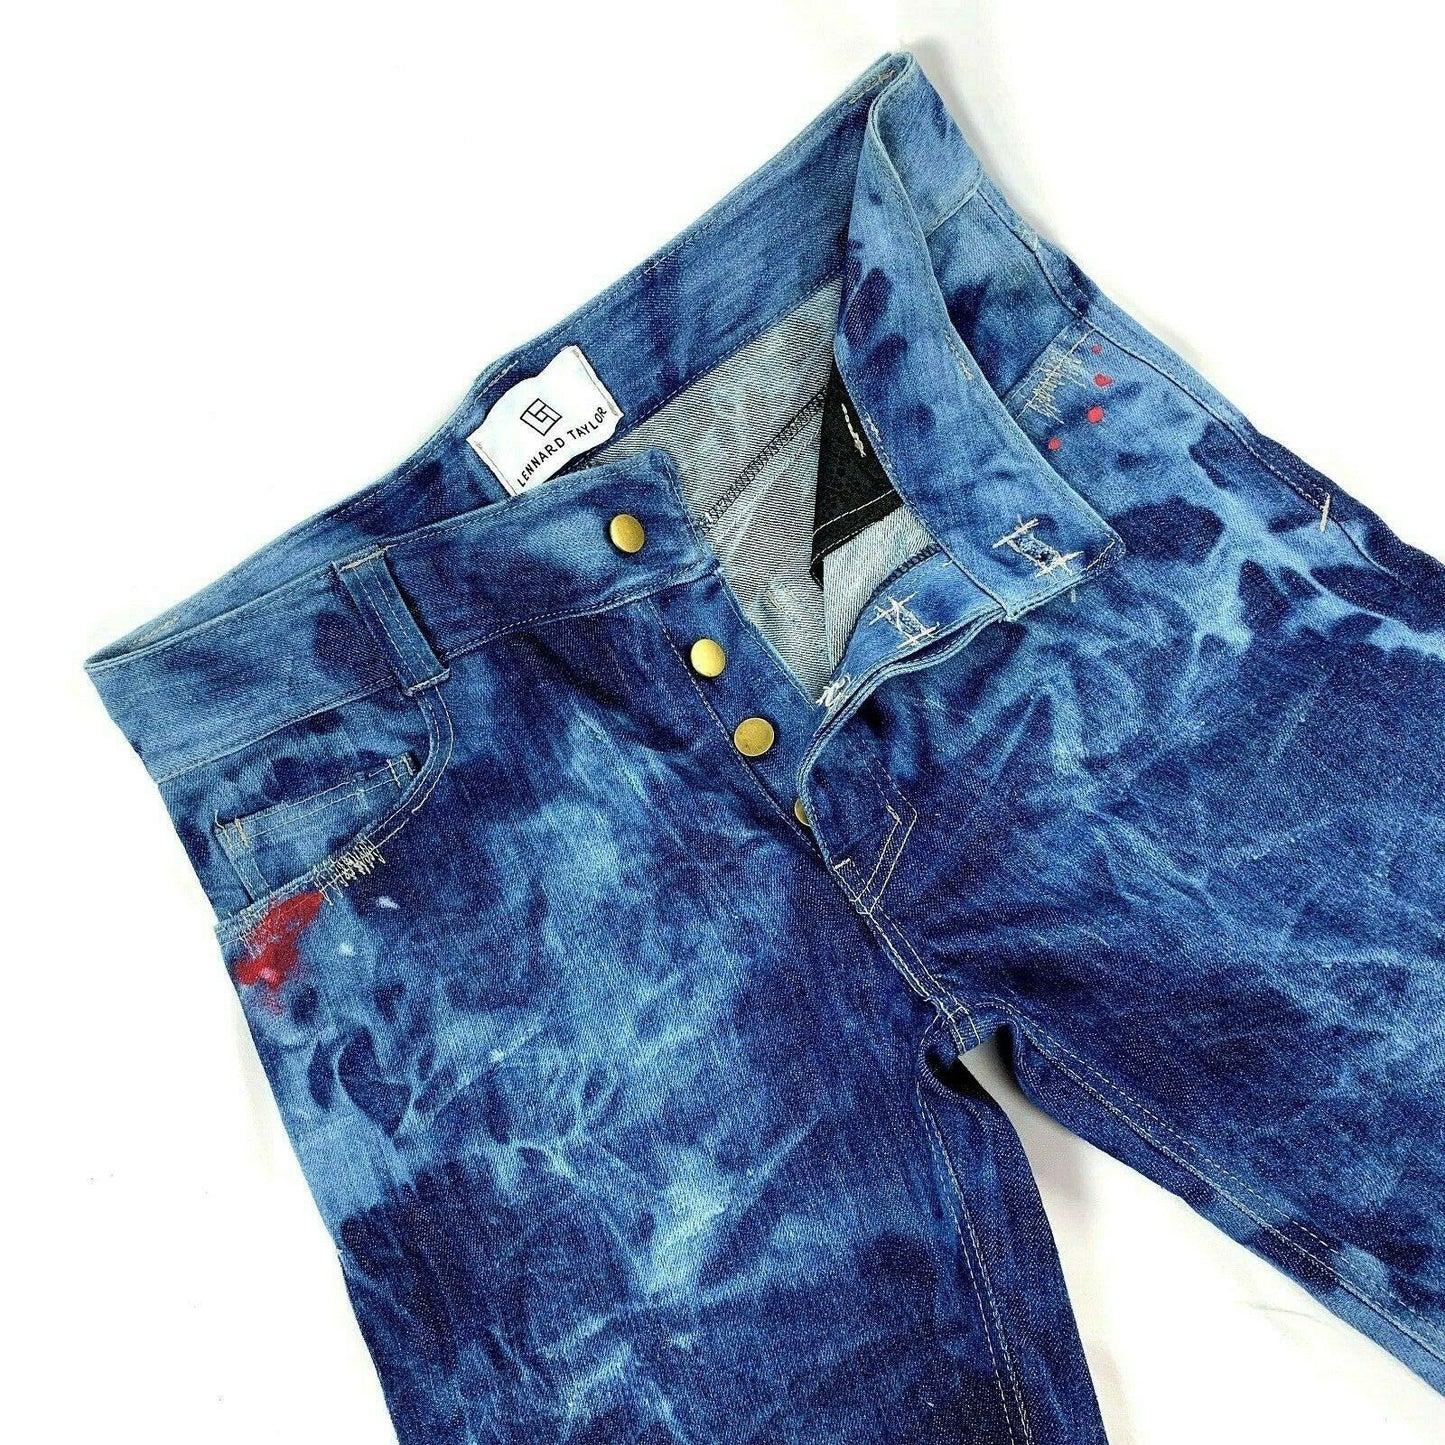 Lennard Taylor Tie Dye Blue Slim 34 Waist 34 Length Denim Jeans - Genuine Design Luxury Consignment